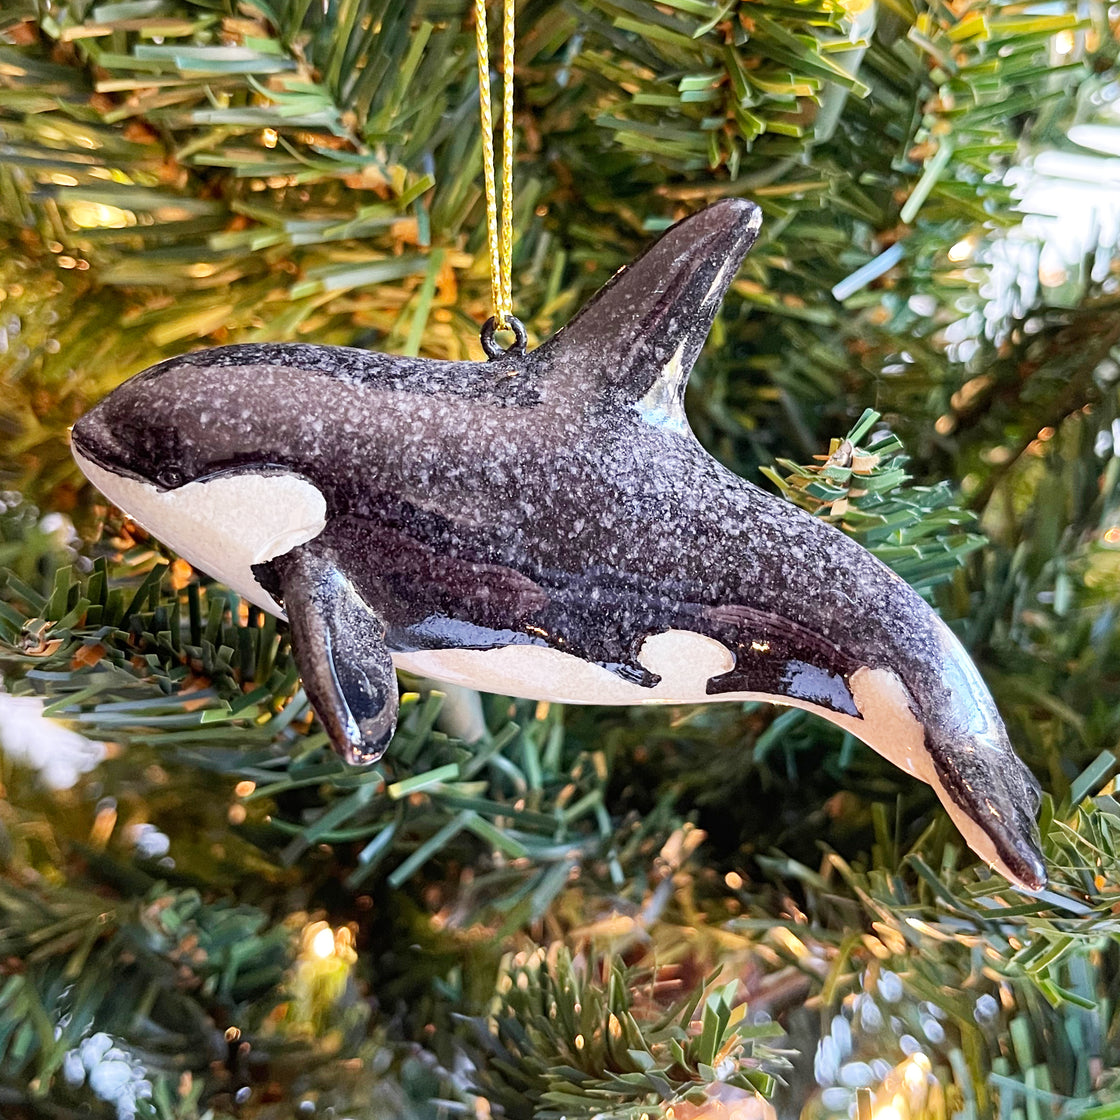 The Rengora Orca Killer Whale Christmas ornament adorning a Christmas tree